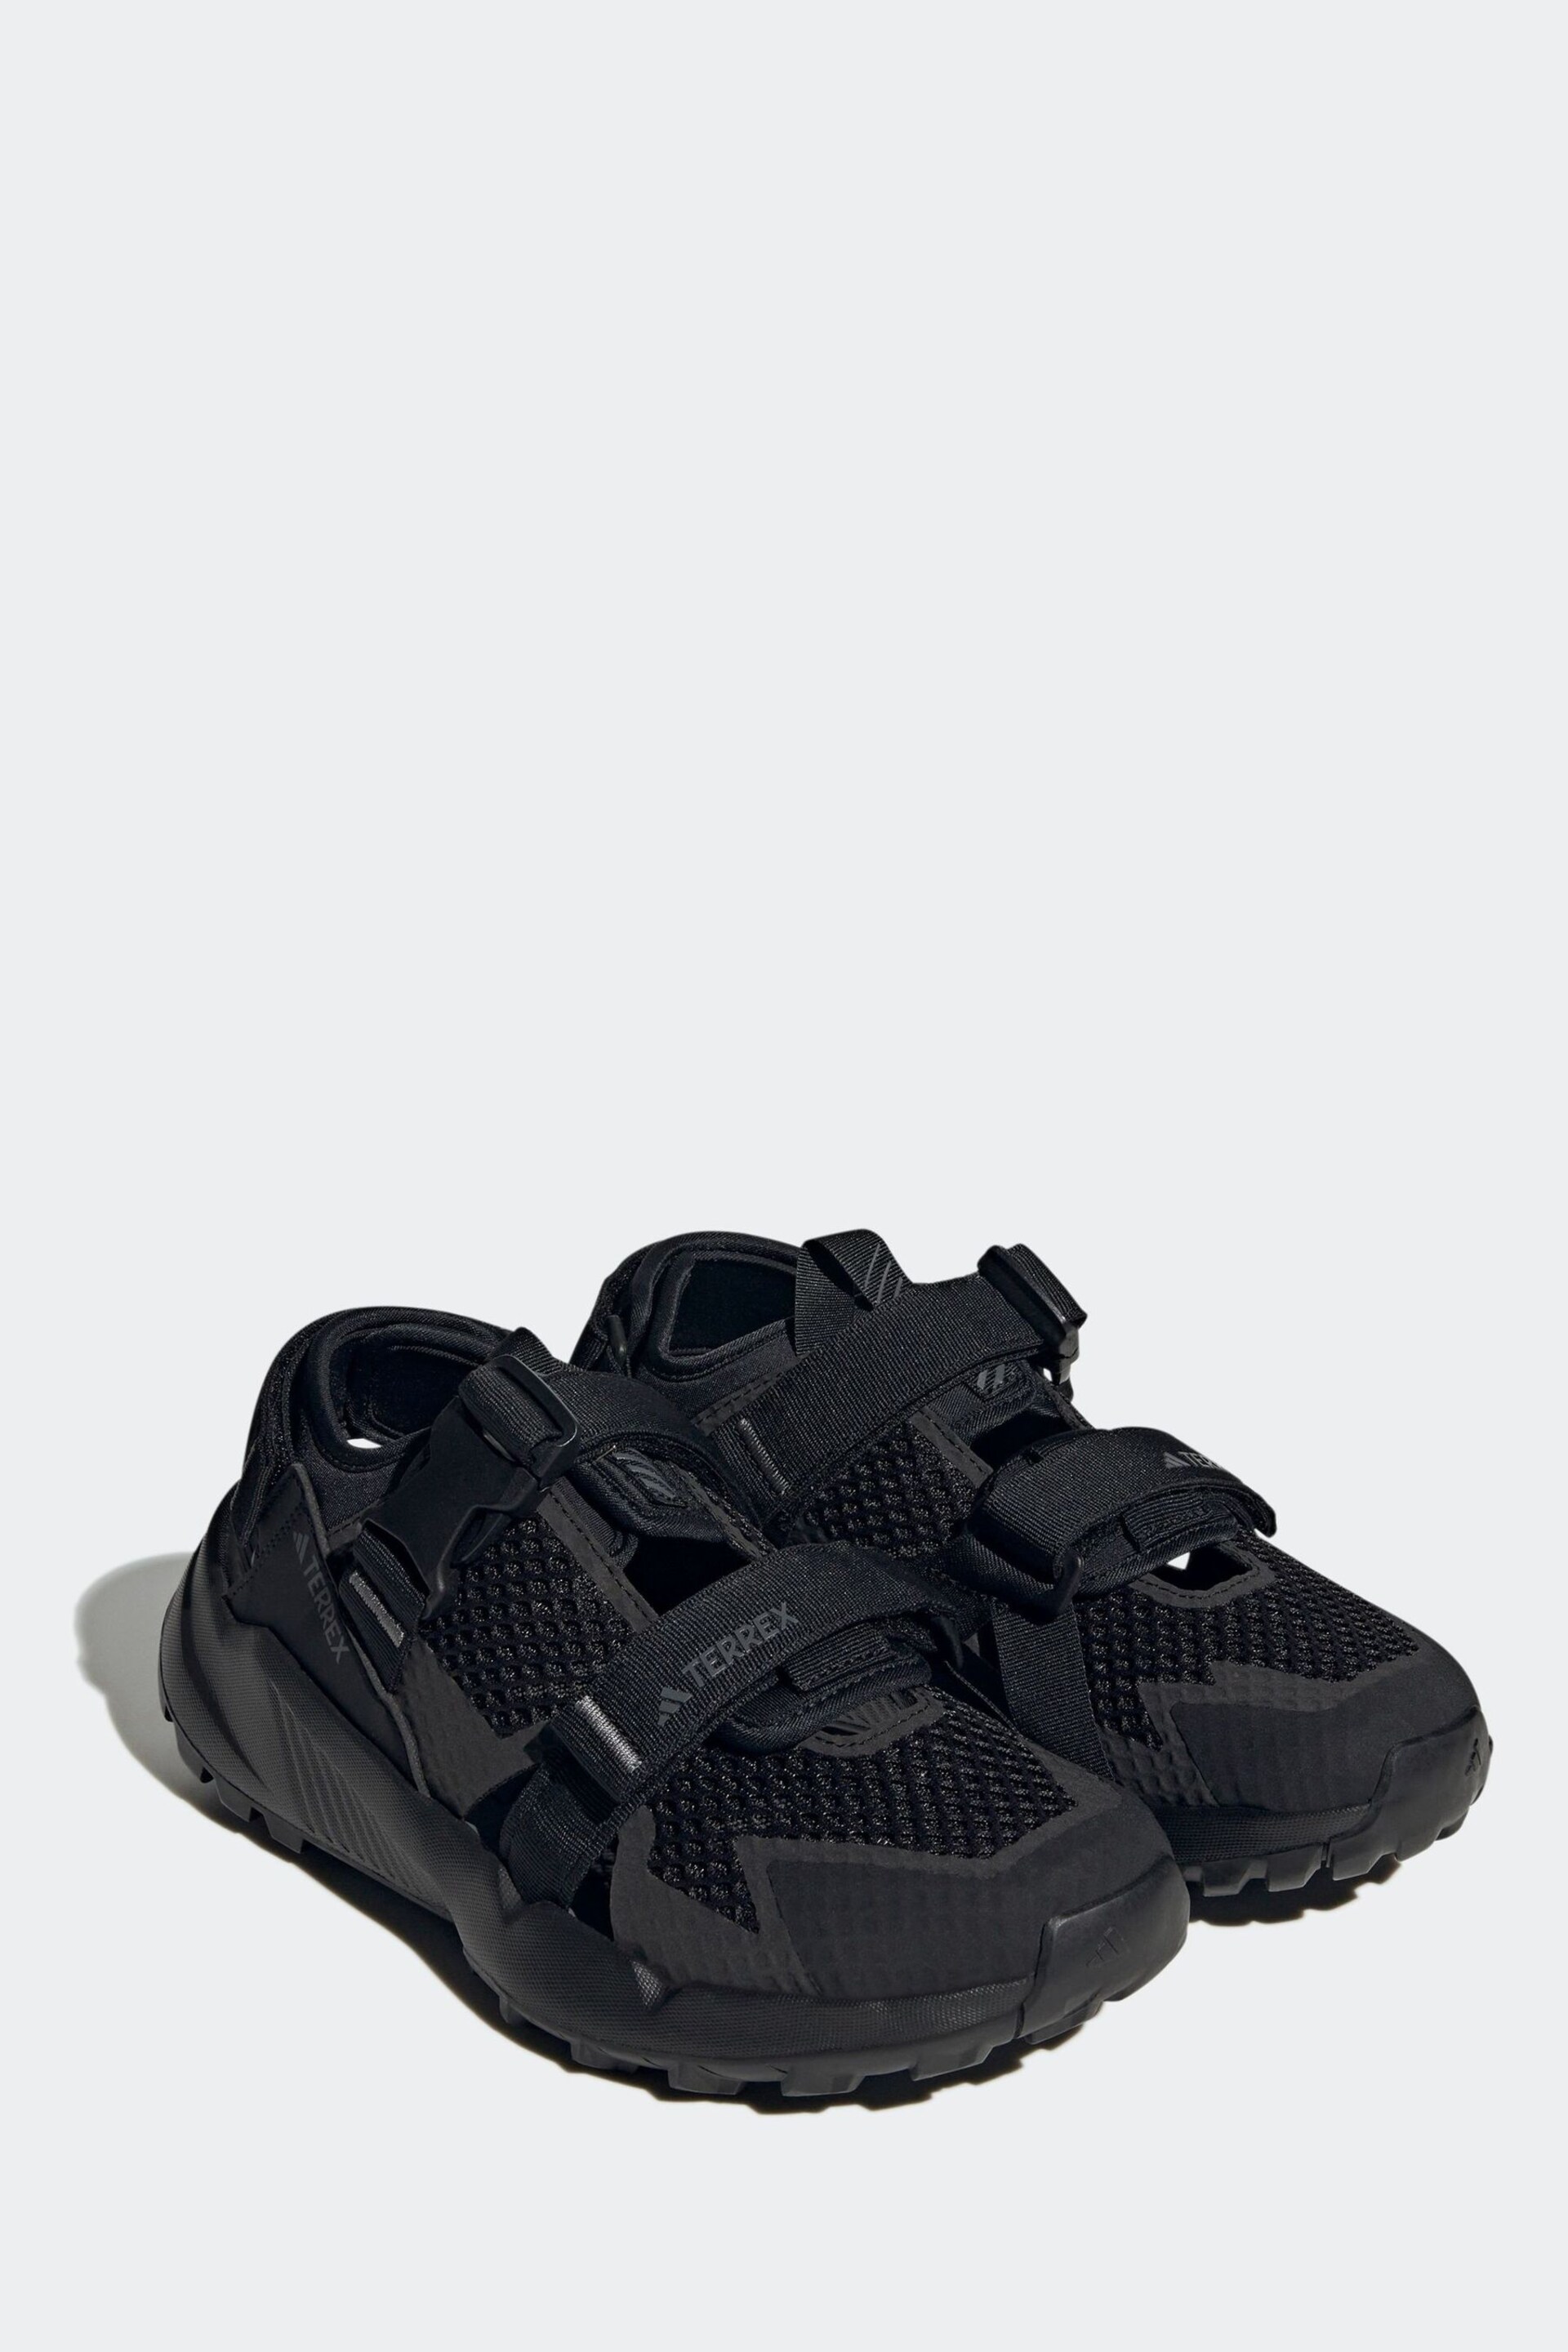 adidas Terrex Hydroterra At Black Sandals - Image 4 of 12